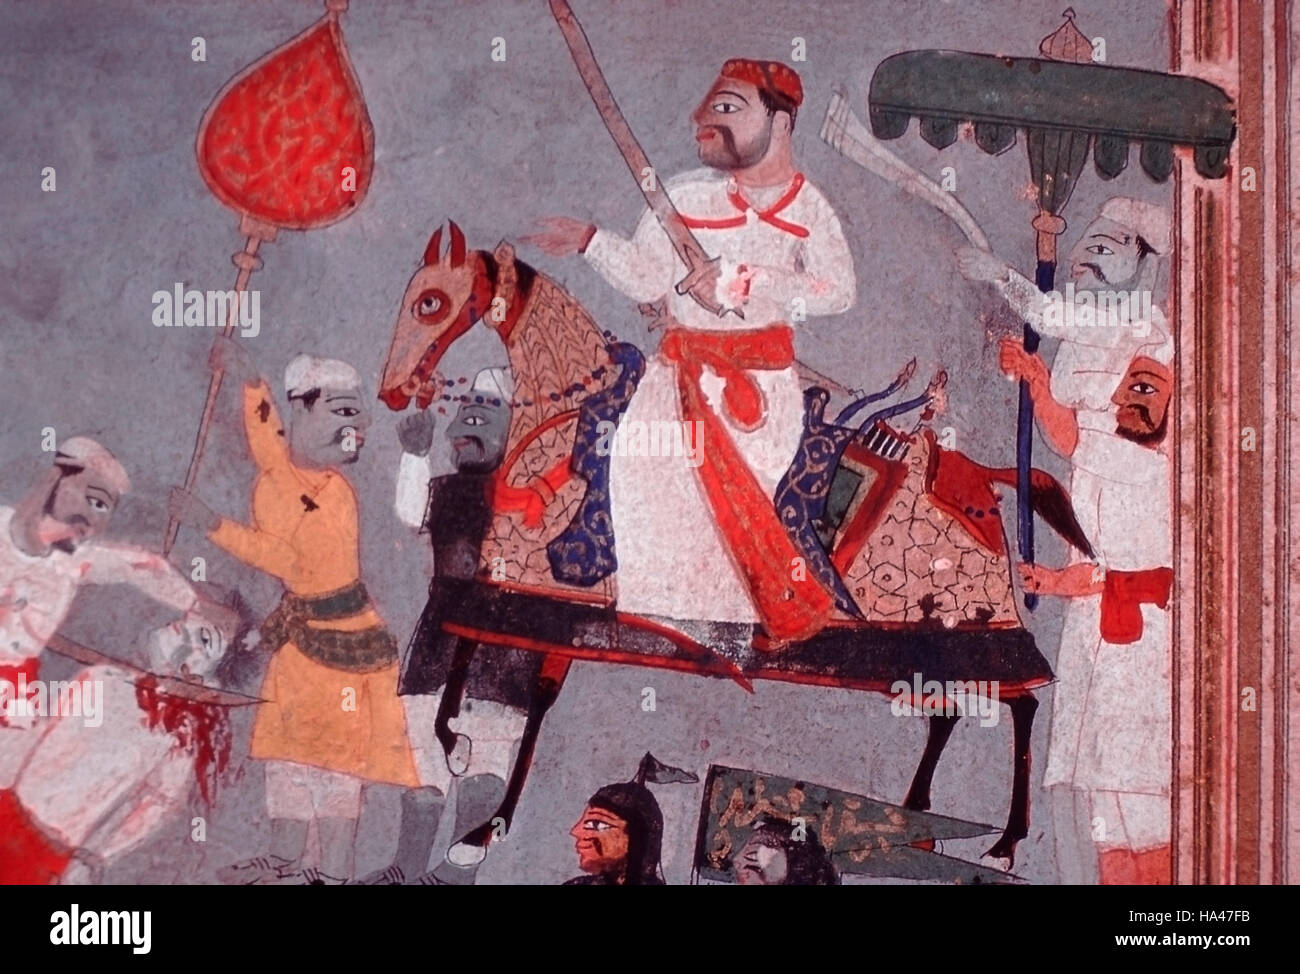 Battle scene detail, Painting from the Tarif i-Husayn Shahi. Dated: 1565 A.D.Nimat-Nama Stock Photo